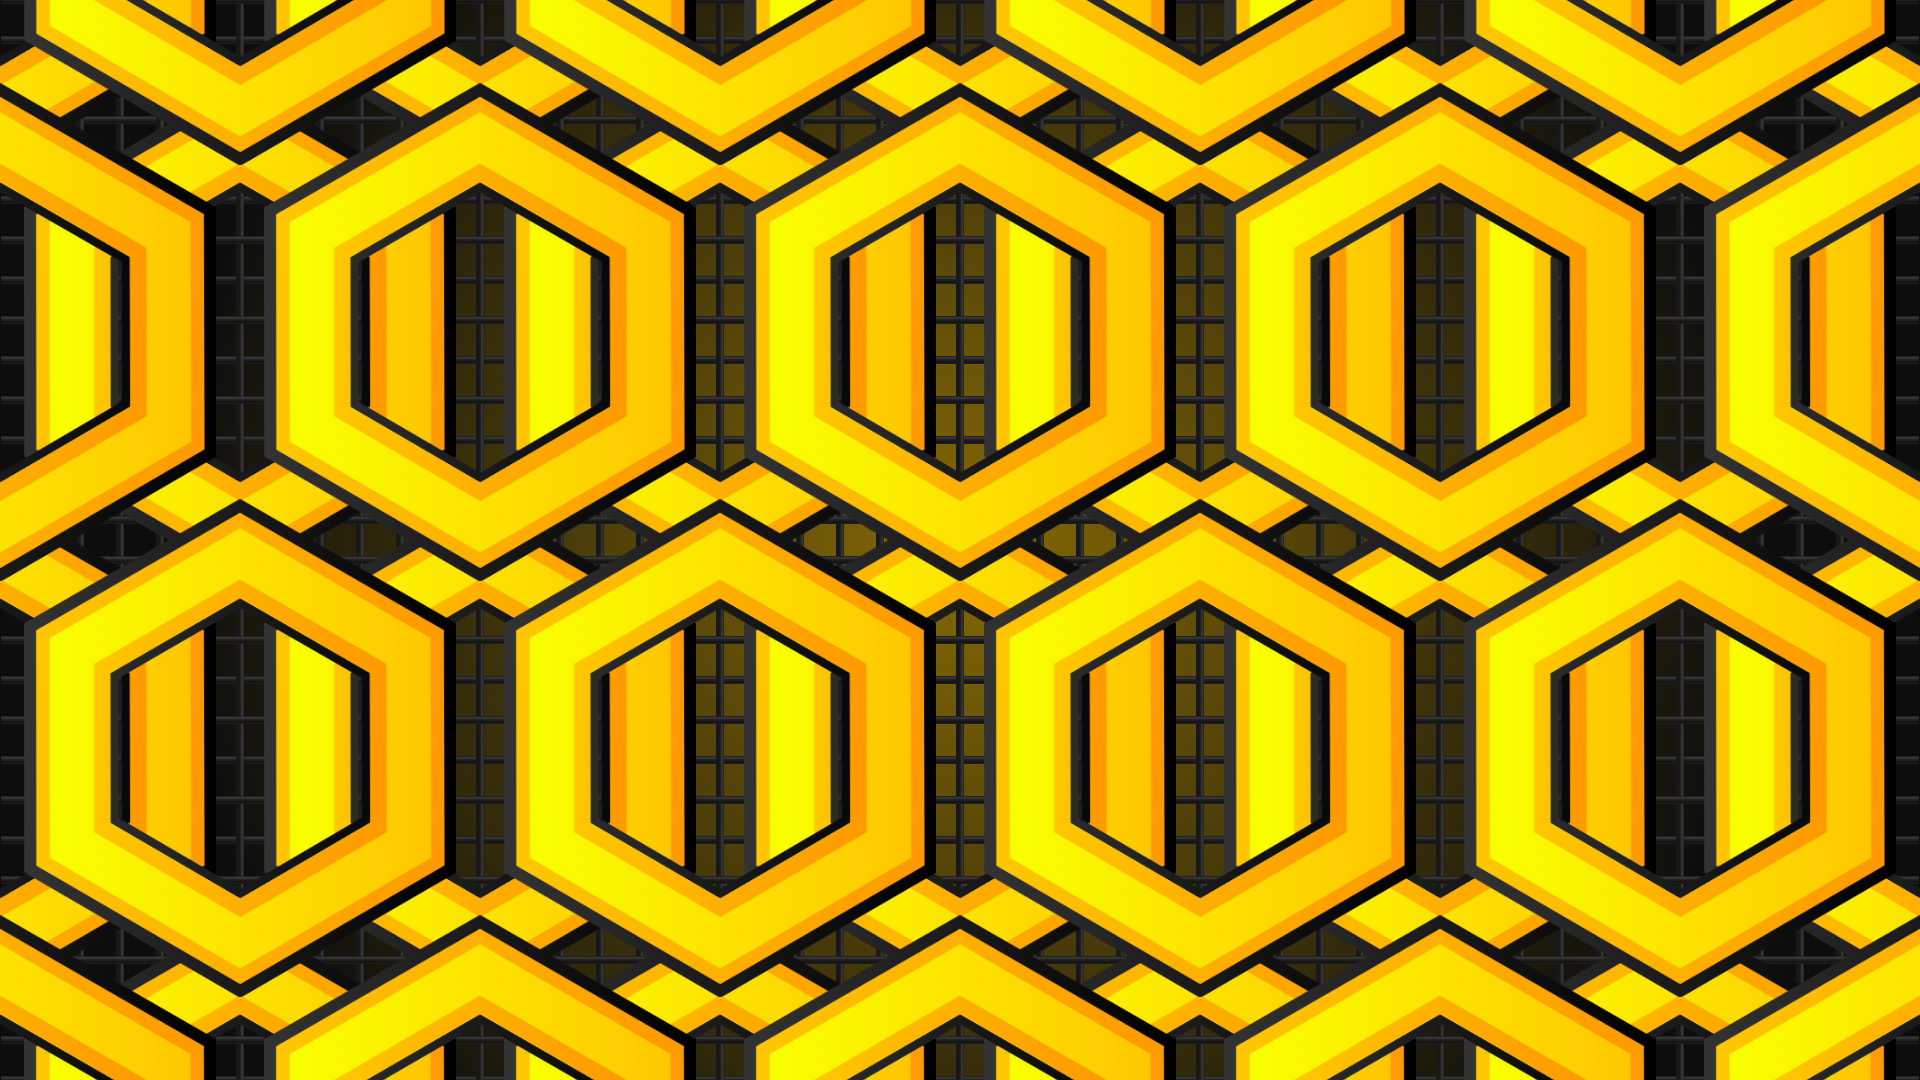 Geometry Geometric Figures Colorful Abstract CGi Digital Art Pattern Artwork Shapes Hexagon 1920x1080